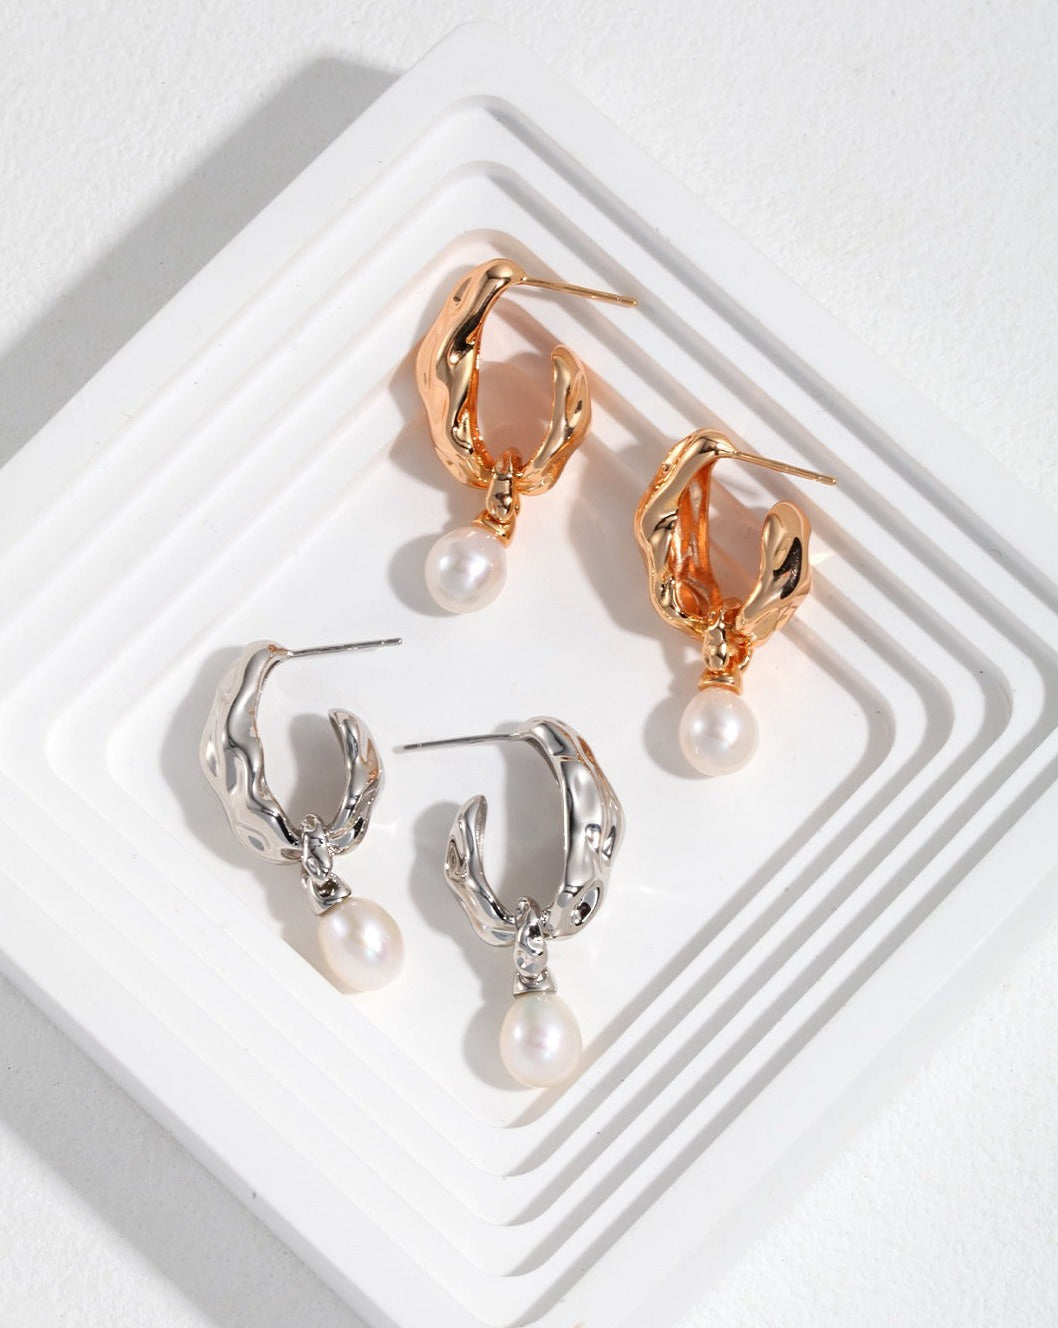 fashion-jewelry-minimalist-jewelry-design-jewelry-statement-necklace-pearl-earring-bracelet-rings-gold-coated-silver-bijoux-retro-gold-jewelry-set-scarf-shape-pearl-earrings